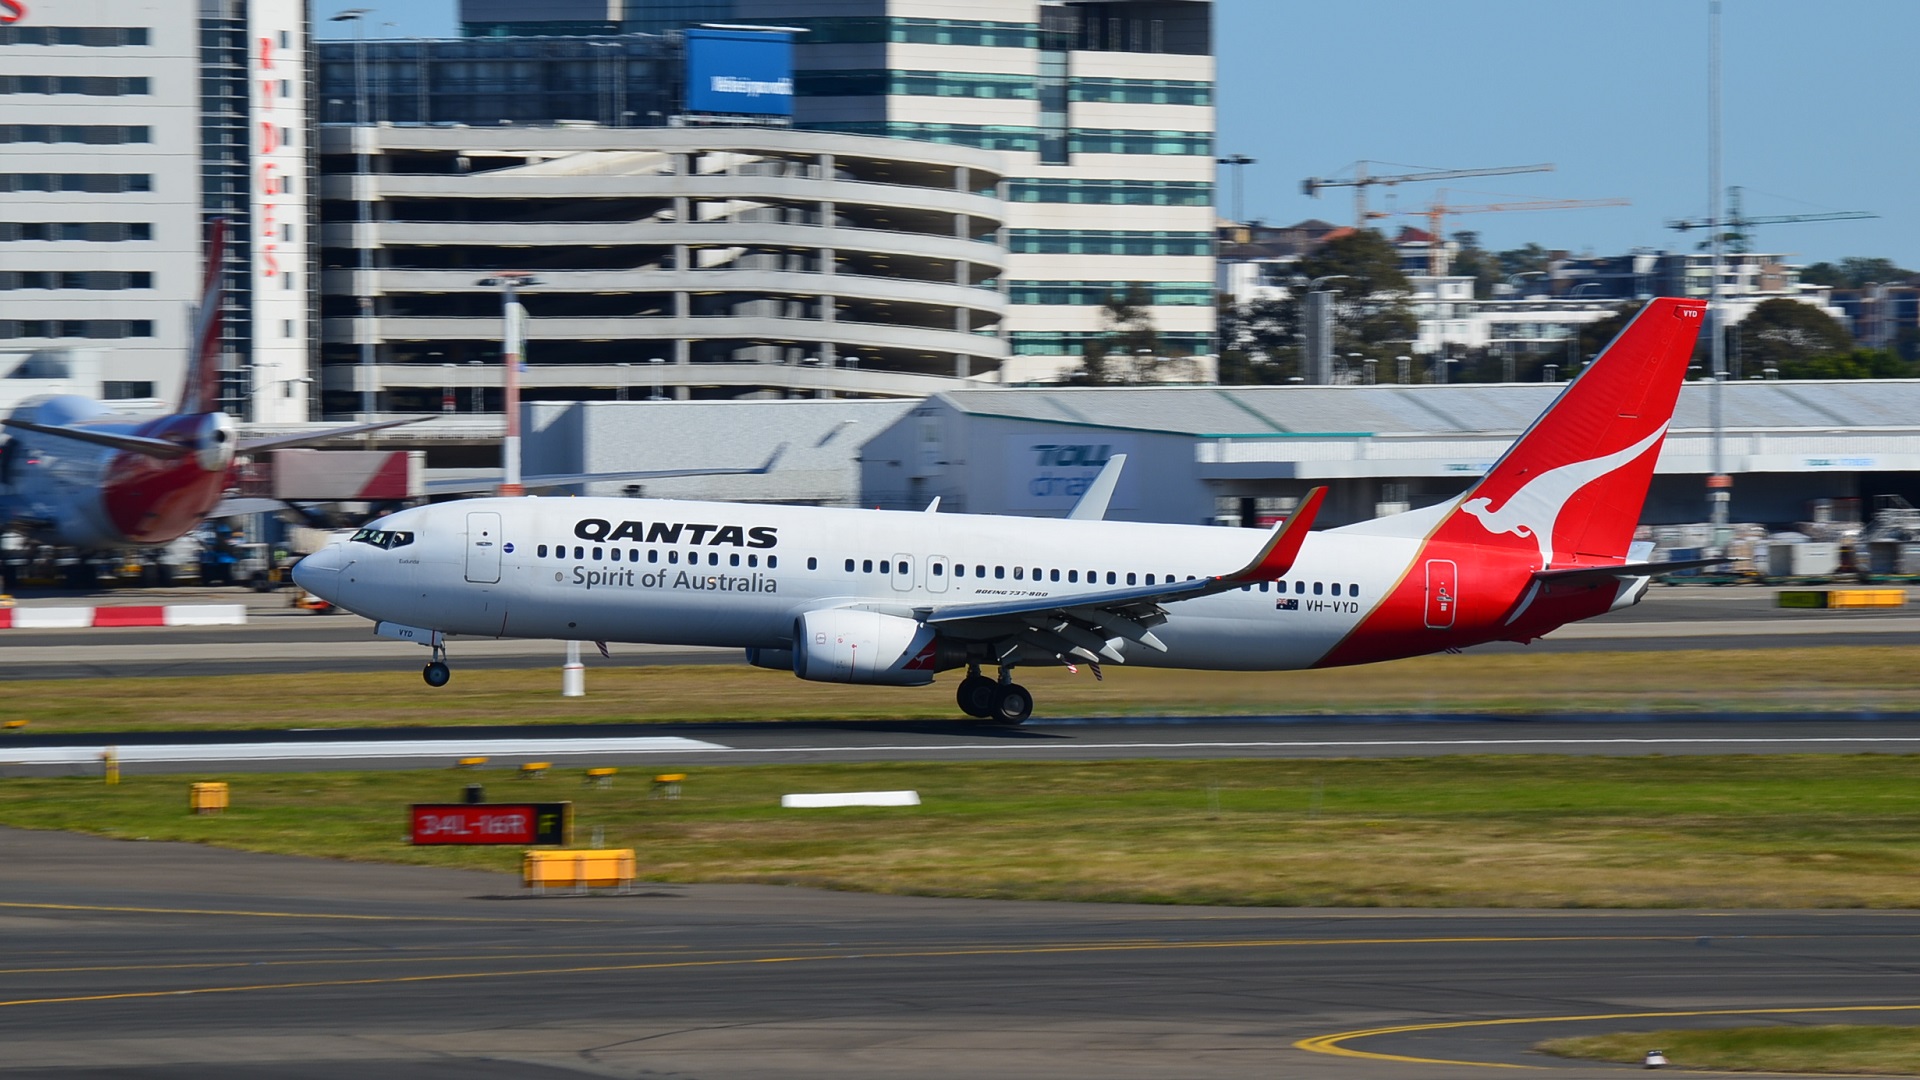 vehicles, aircraft, airplane, airport, boeing, motion blur, passenger plane, qantas, vehicle, boeing 737